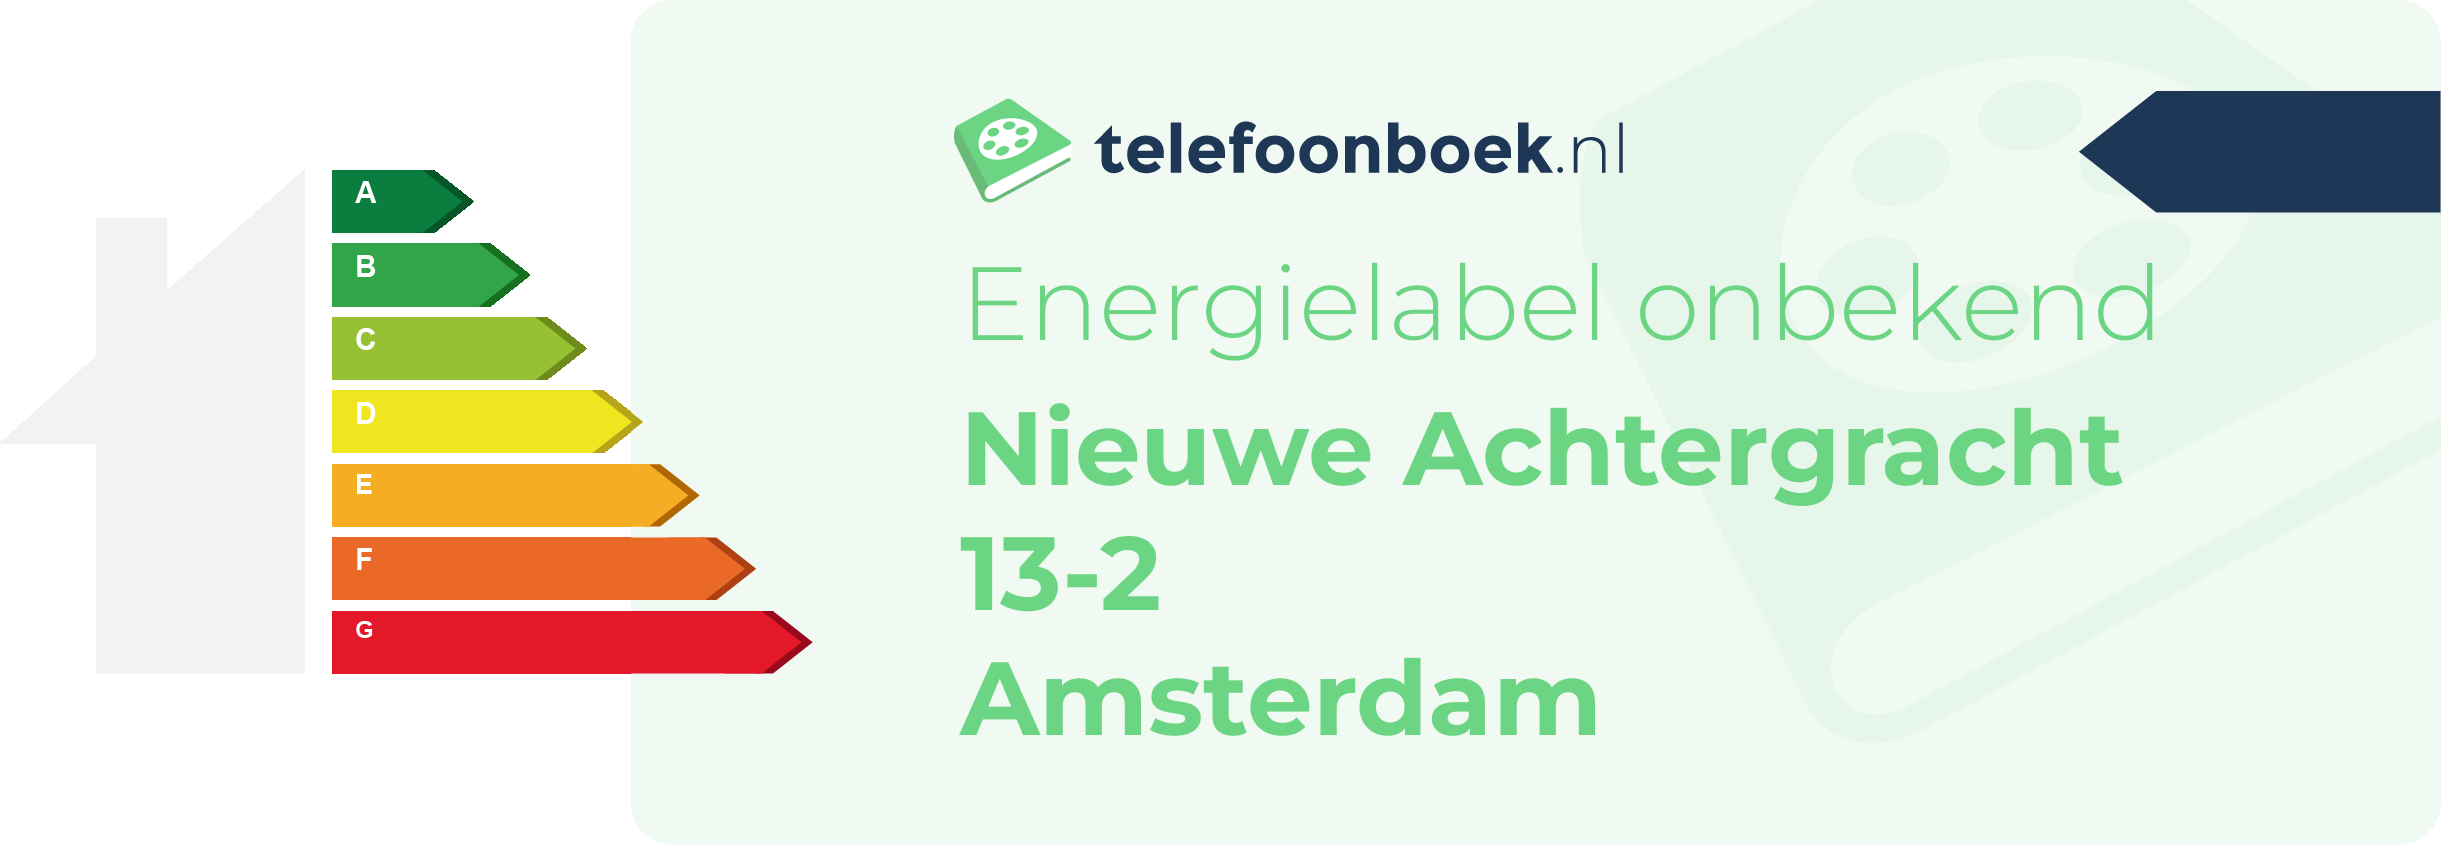 Energielabel Nieuwe Achtergracht 13-2 Amsterdam